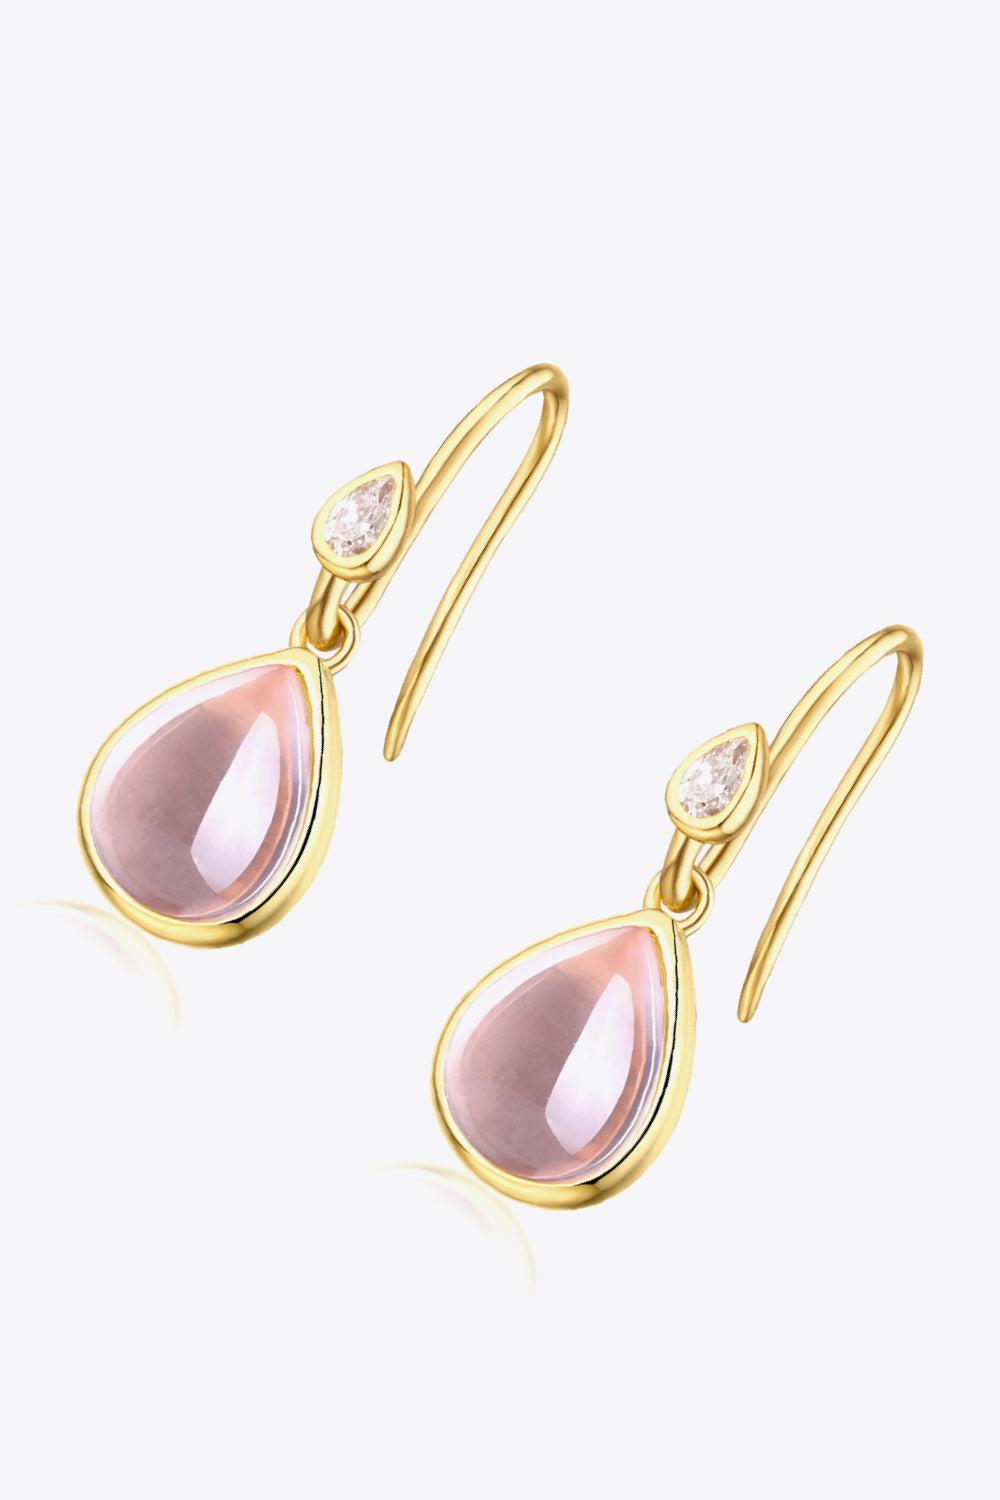 Teardrop Rose Quartz 10K Gold-Plated Earrings-Earrings-[Adult]-[Female]-Blush Pink-One Size-2022 Online Blue Zone Planet